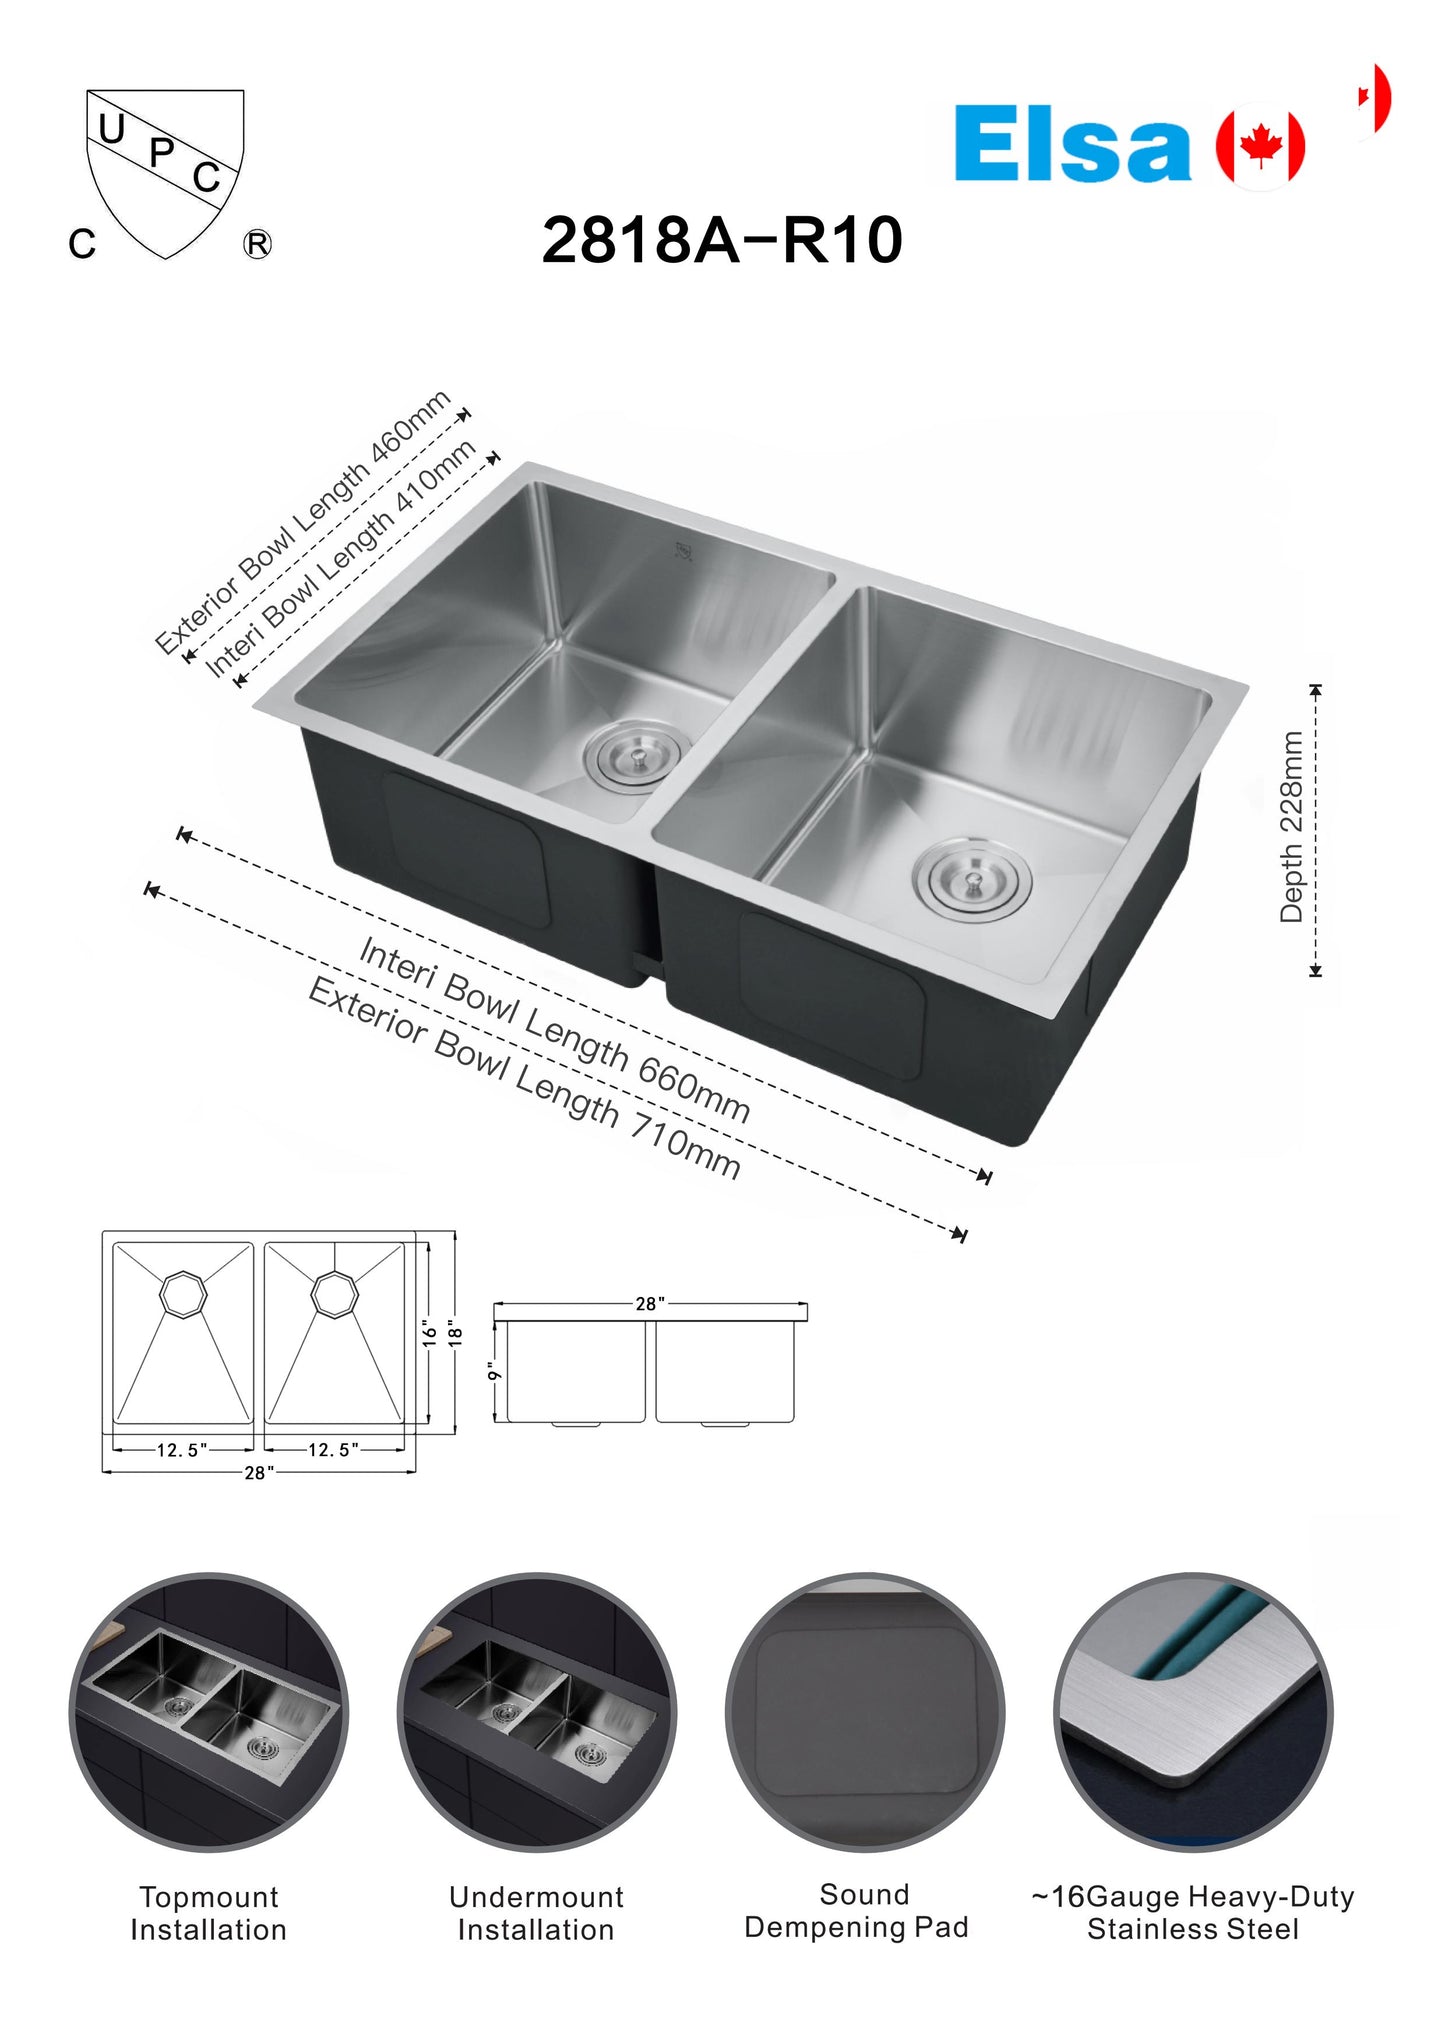 *BULK DEAL* WHITE BOX DS2818A-R10 handmade kitchen sink undermount double bowl (drains not included) 710x460x228mm exterior 28"x18"x9" interior 26"x16"x9" $139/pc bulk Deal 10pcs+ $129/pc